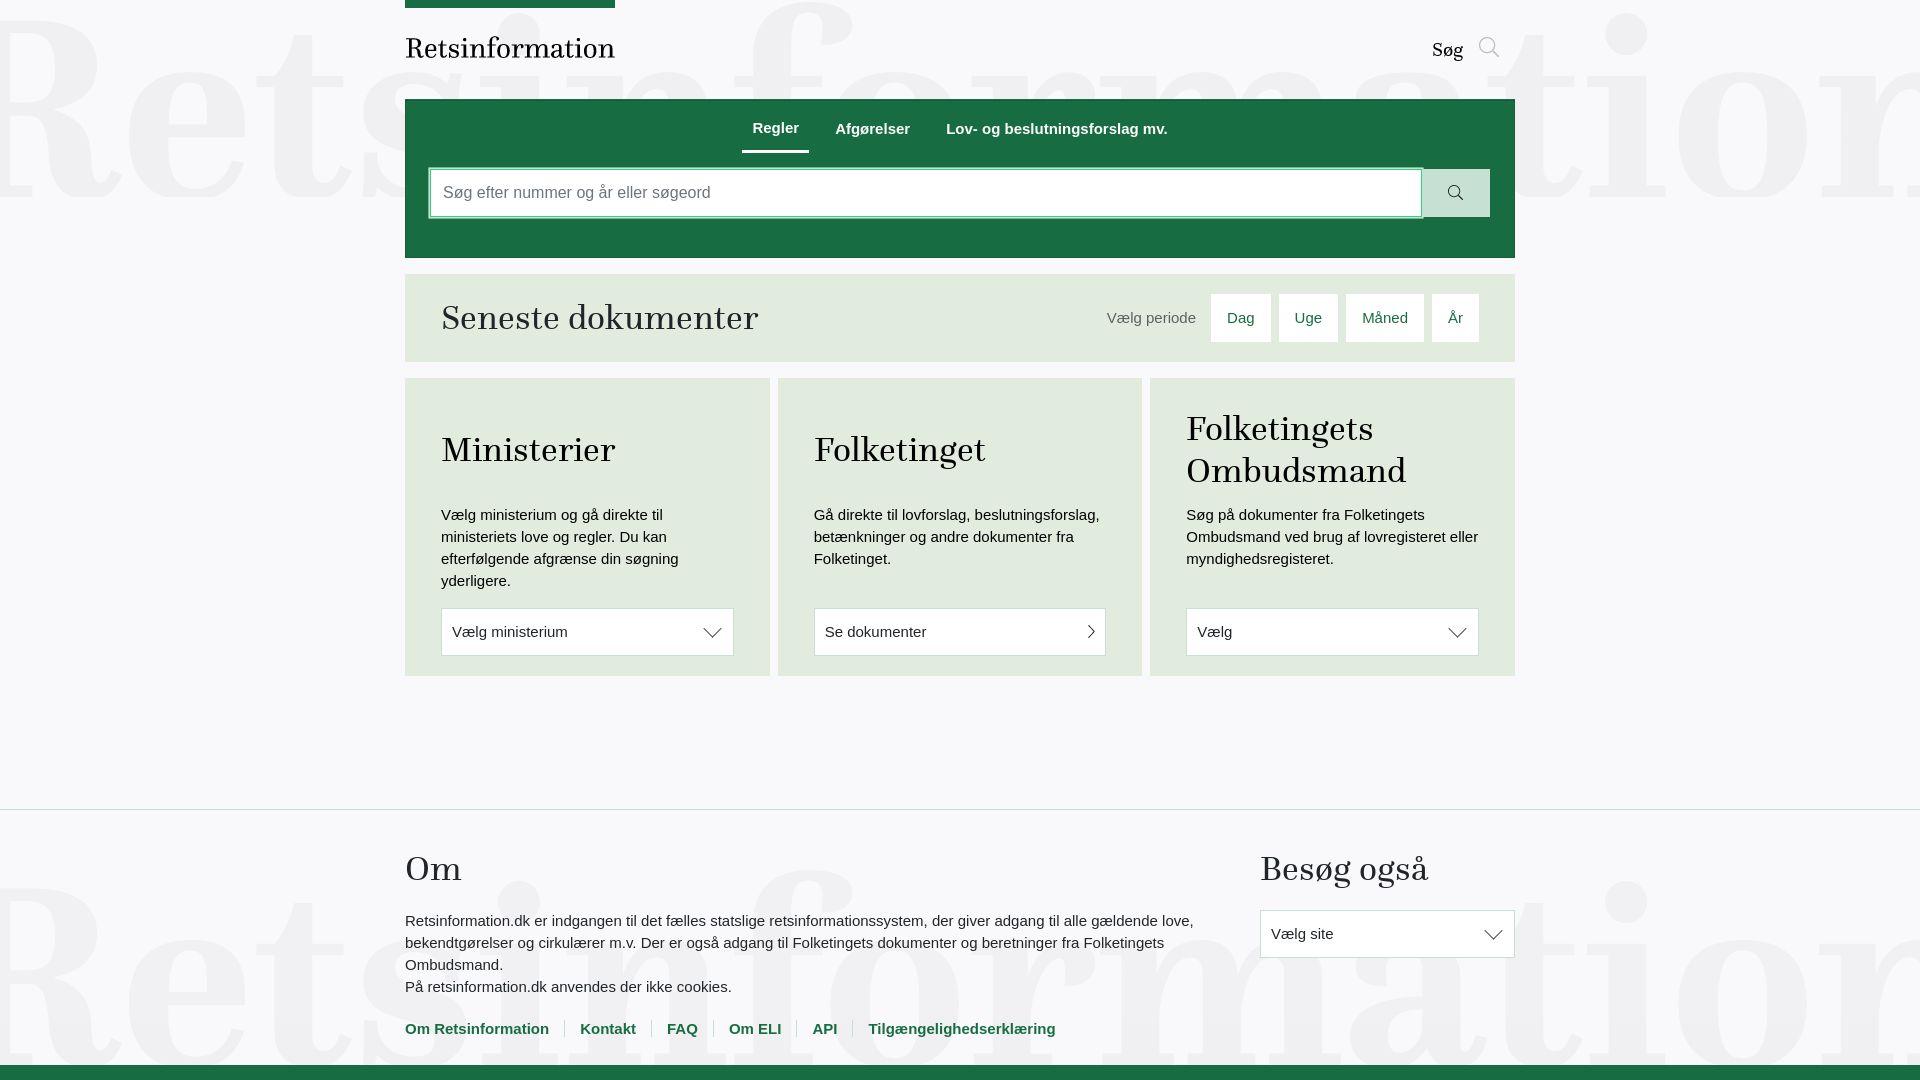 Status do site retsinformation.dk está   ONLINE